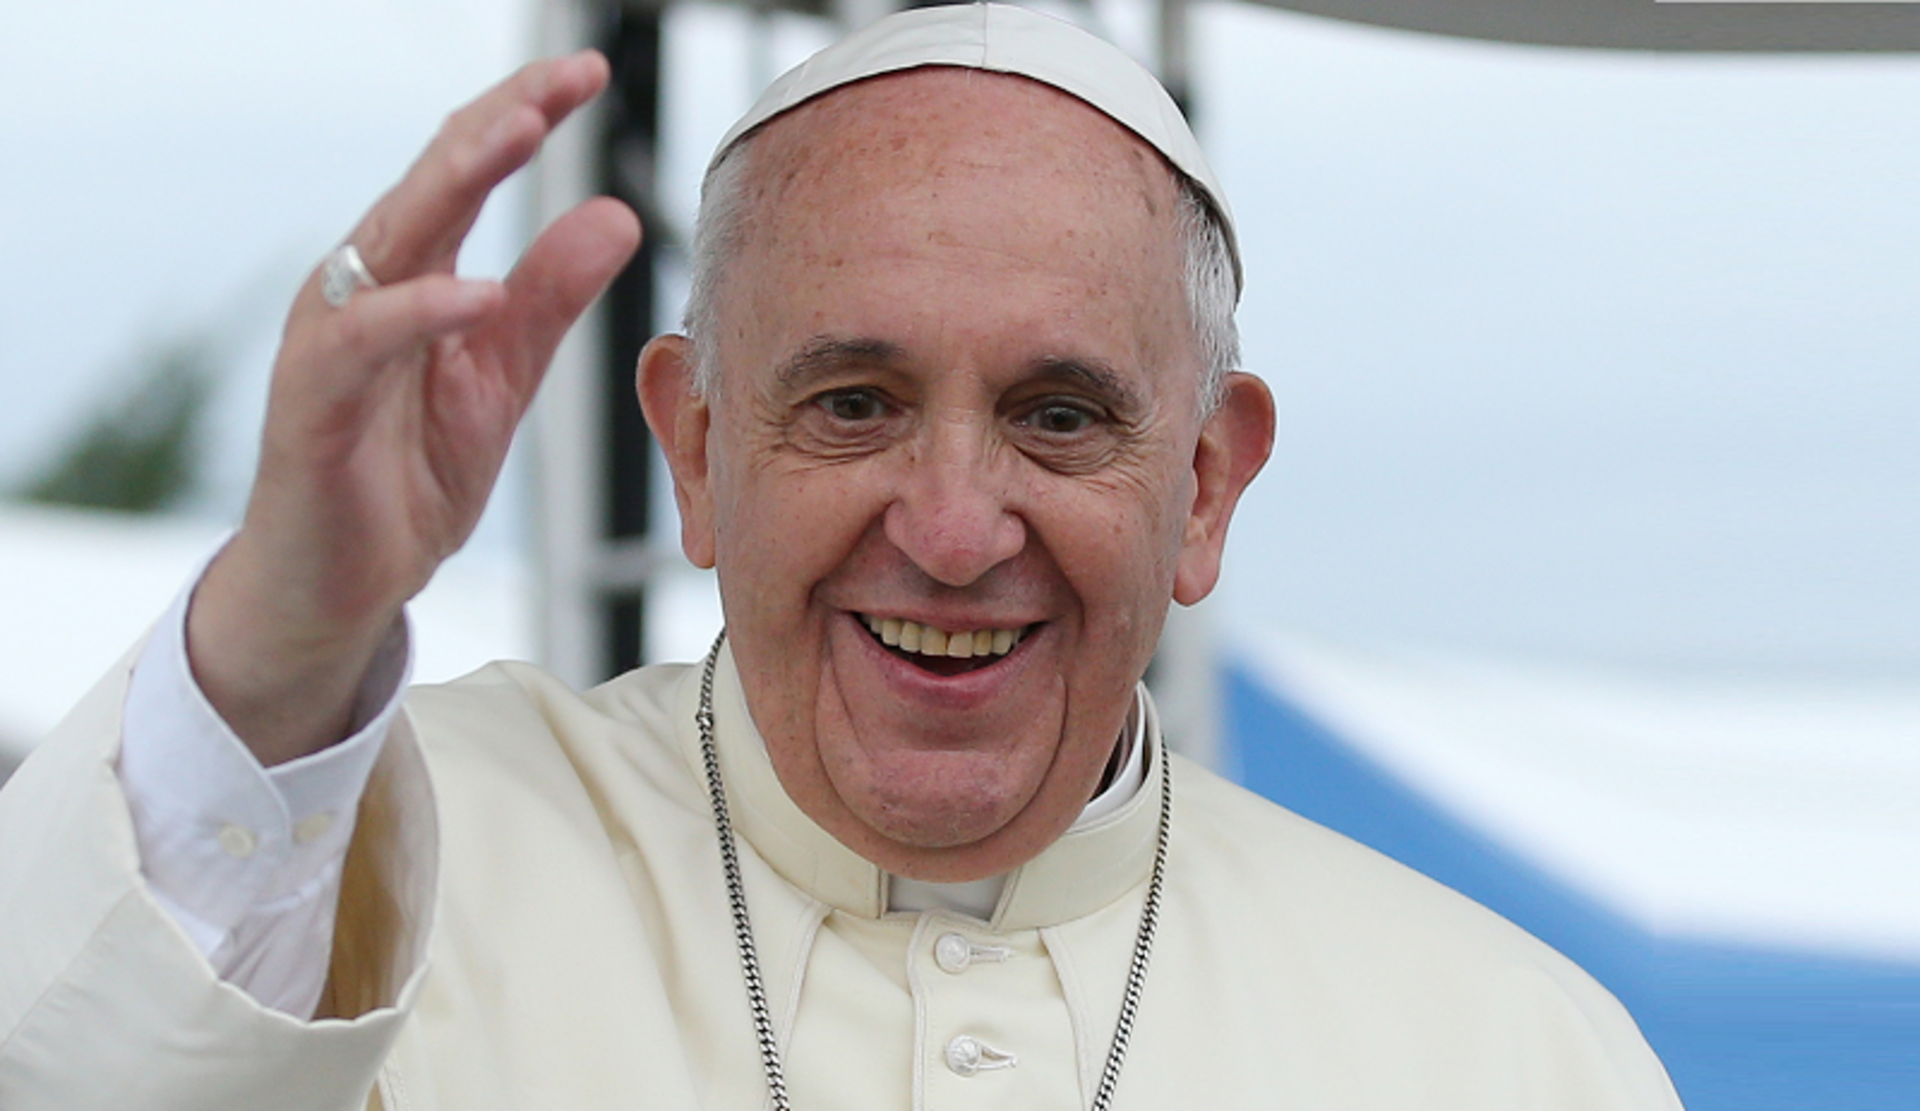 Папа Франциск. Папа Римский Франци́ск. Понтифик папа Римский Франциск. Франциск (папа Римский) фото. Папа римский о войне